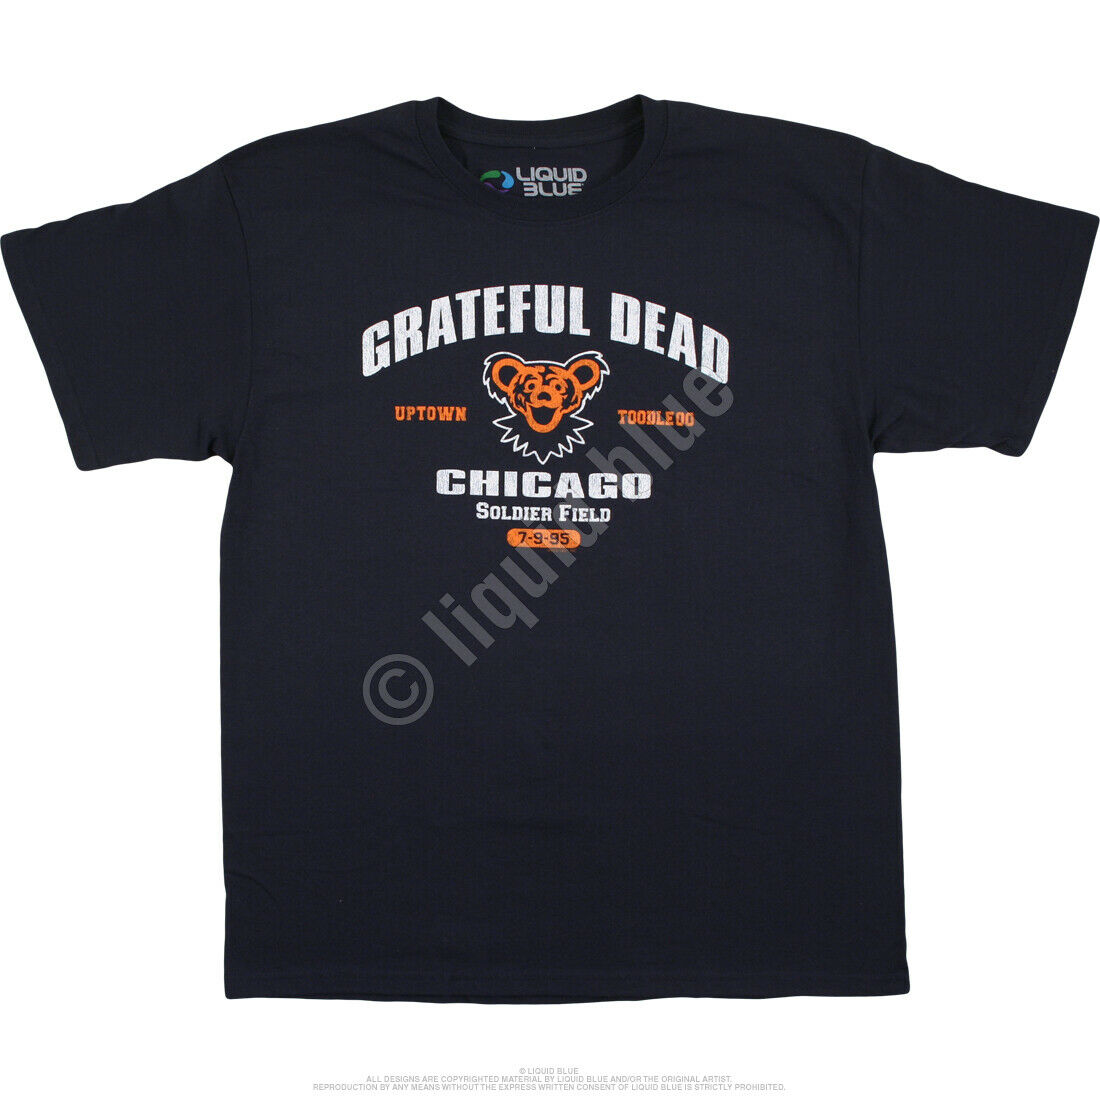 Grateful Dead Chicago 95 Tour Soldier Field Tshirt S M L Xl Xxl 3x 4x 5x 6x Xetsy